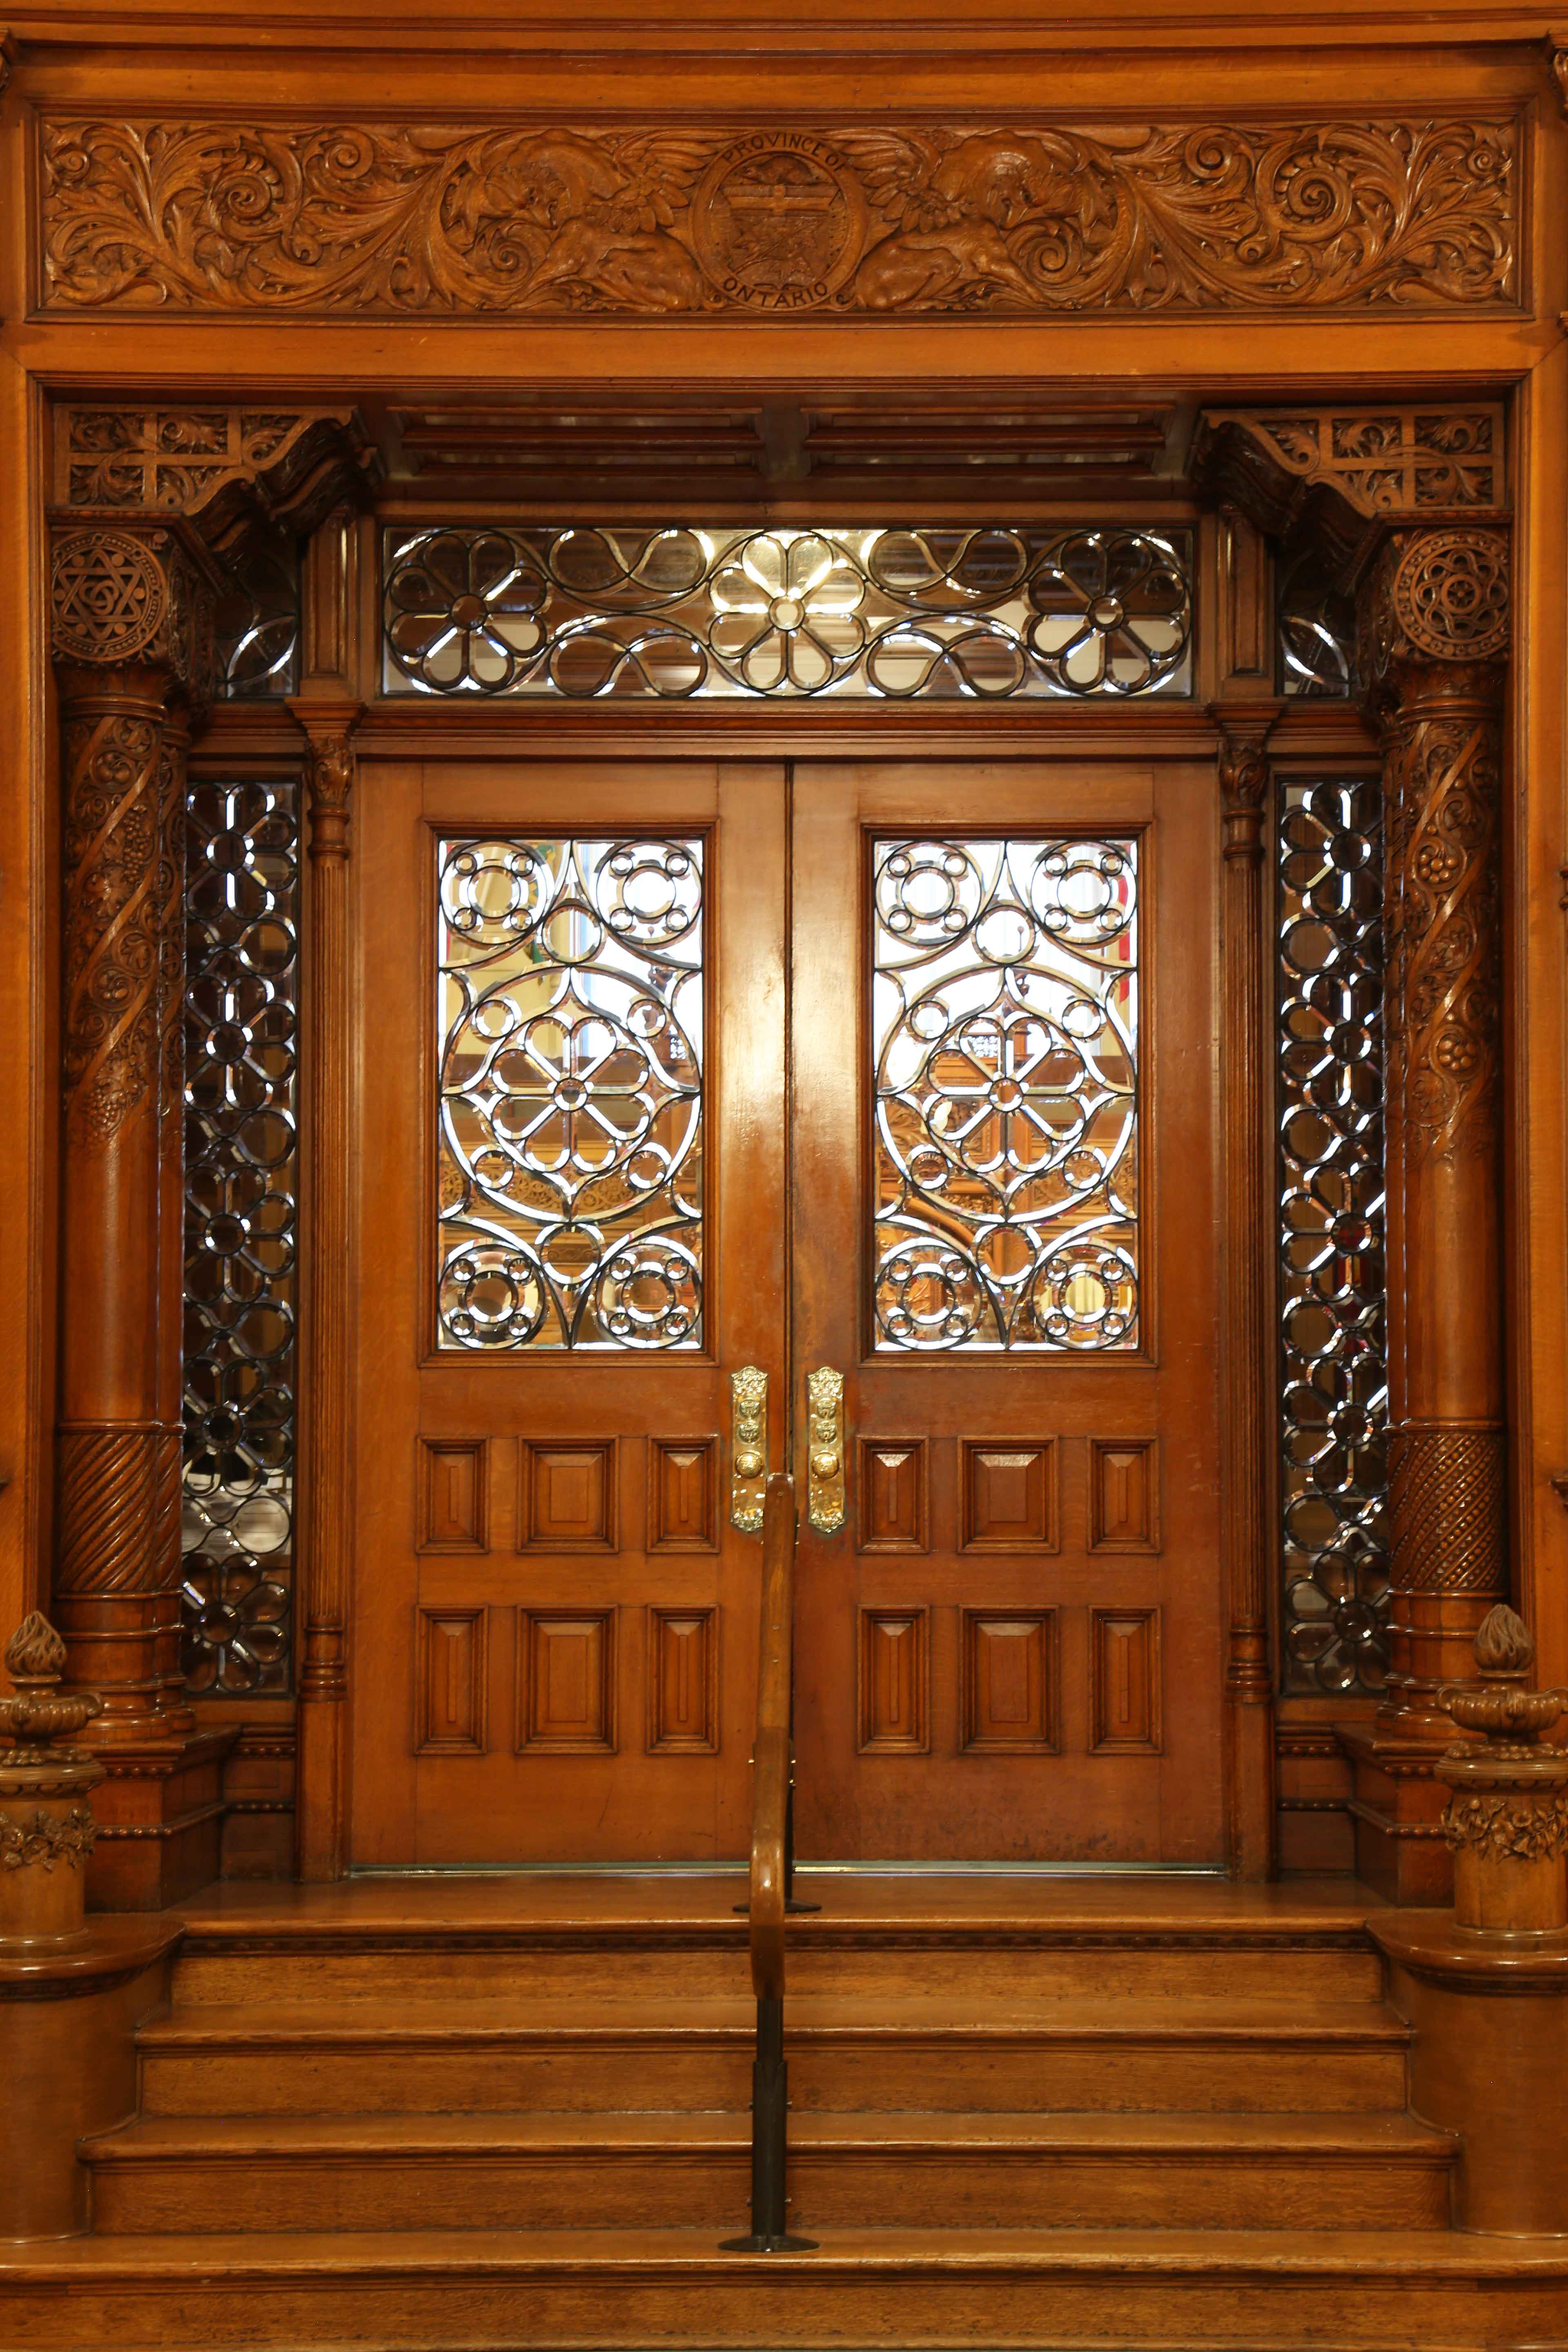 The ornate doors of the Legislative Chamber